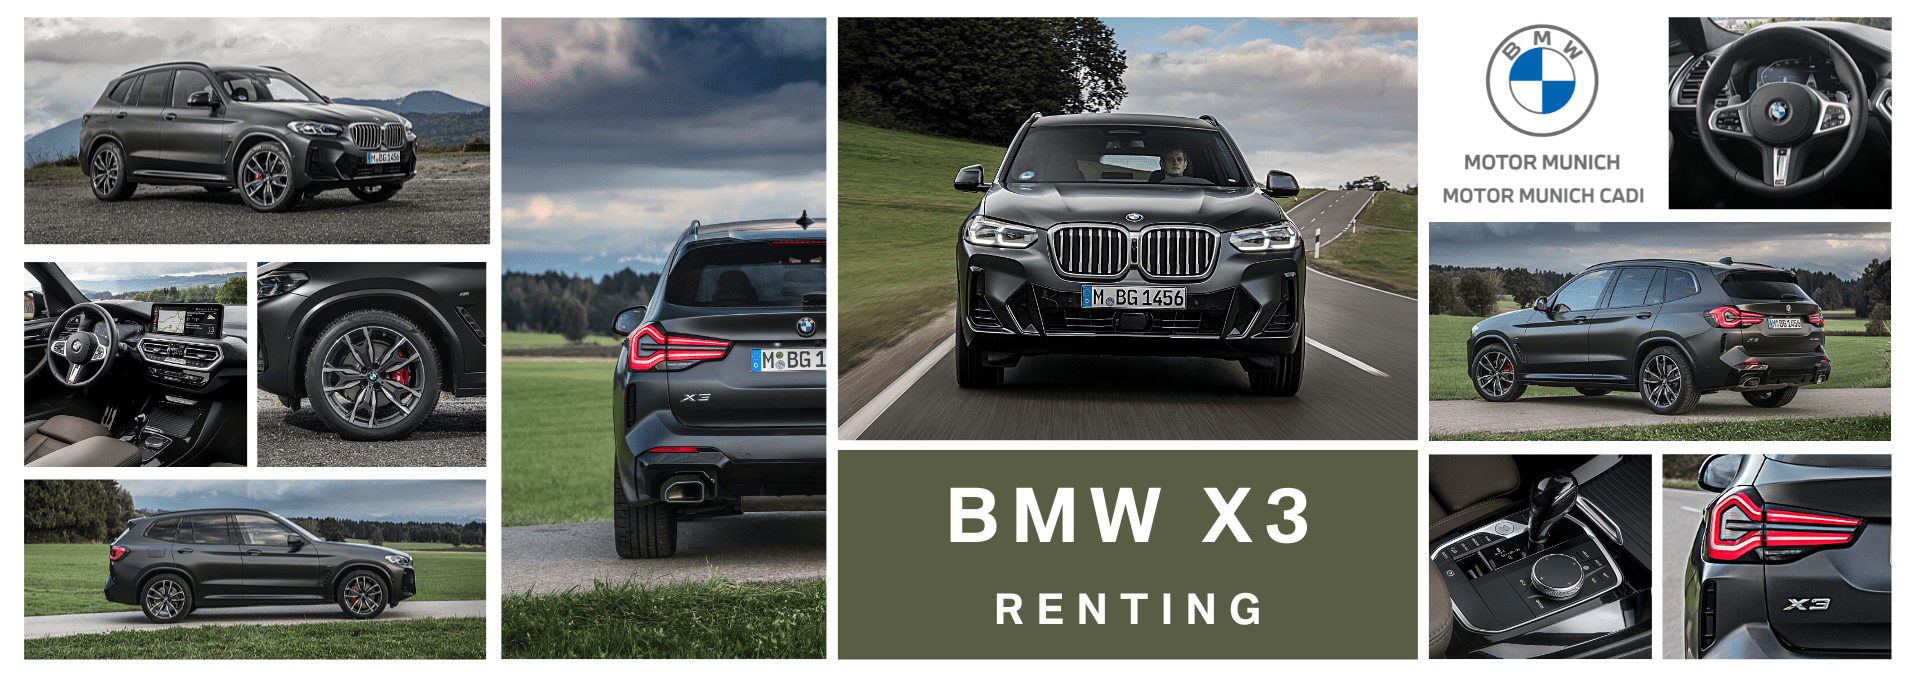 BMW X3 Renting